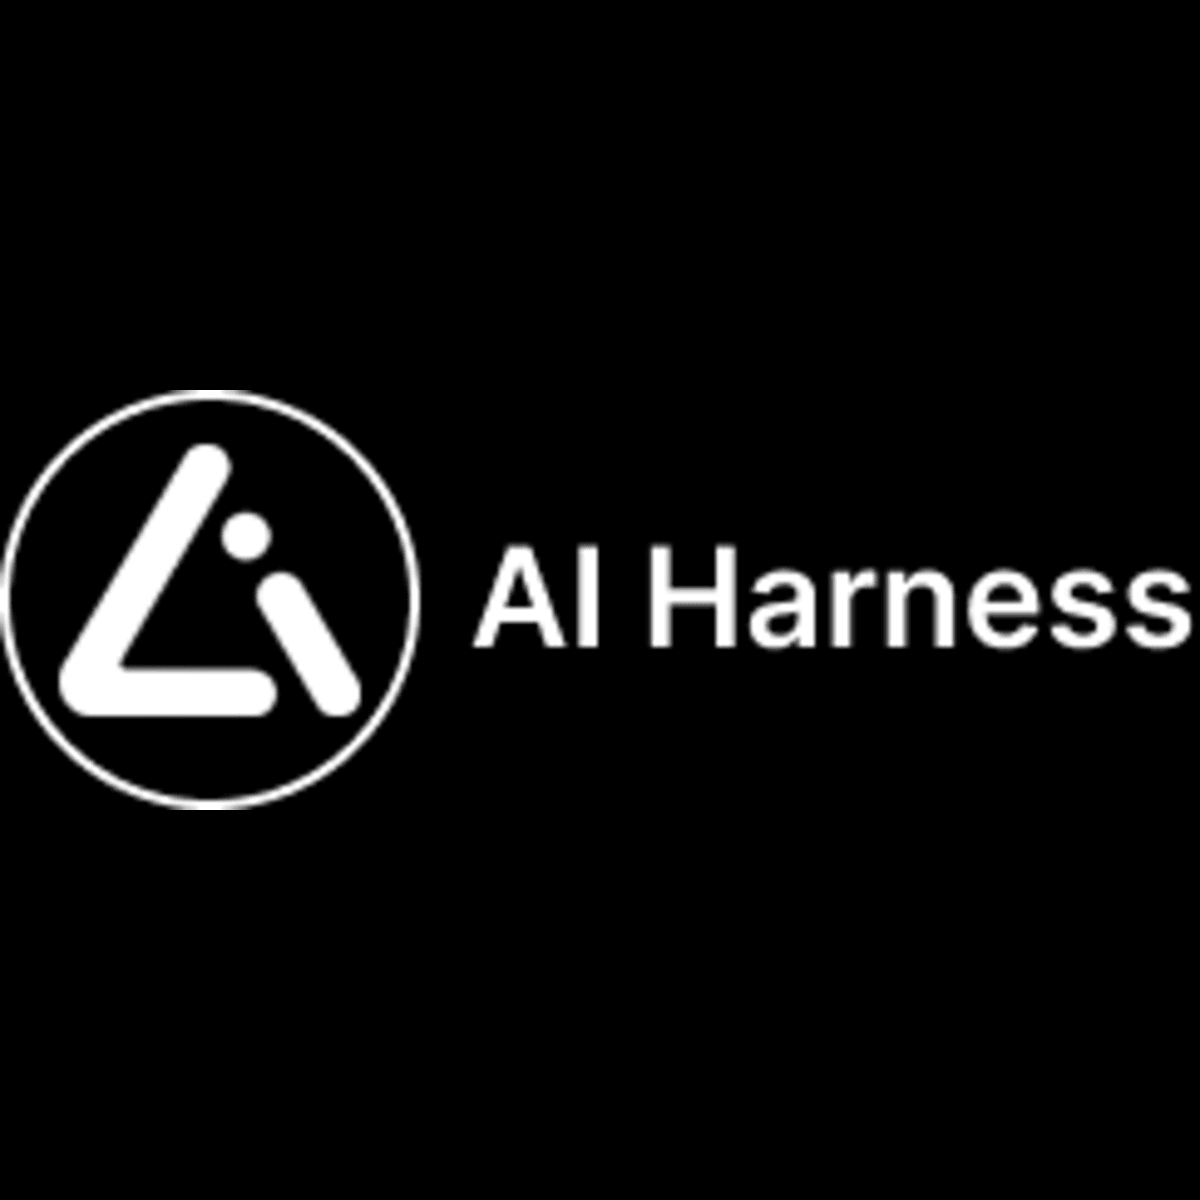 AI Harness